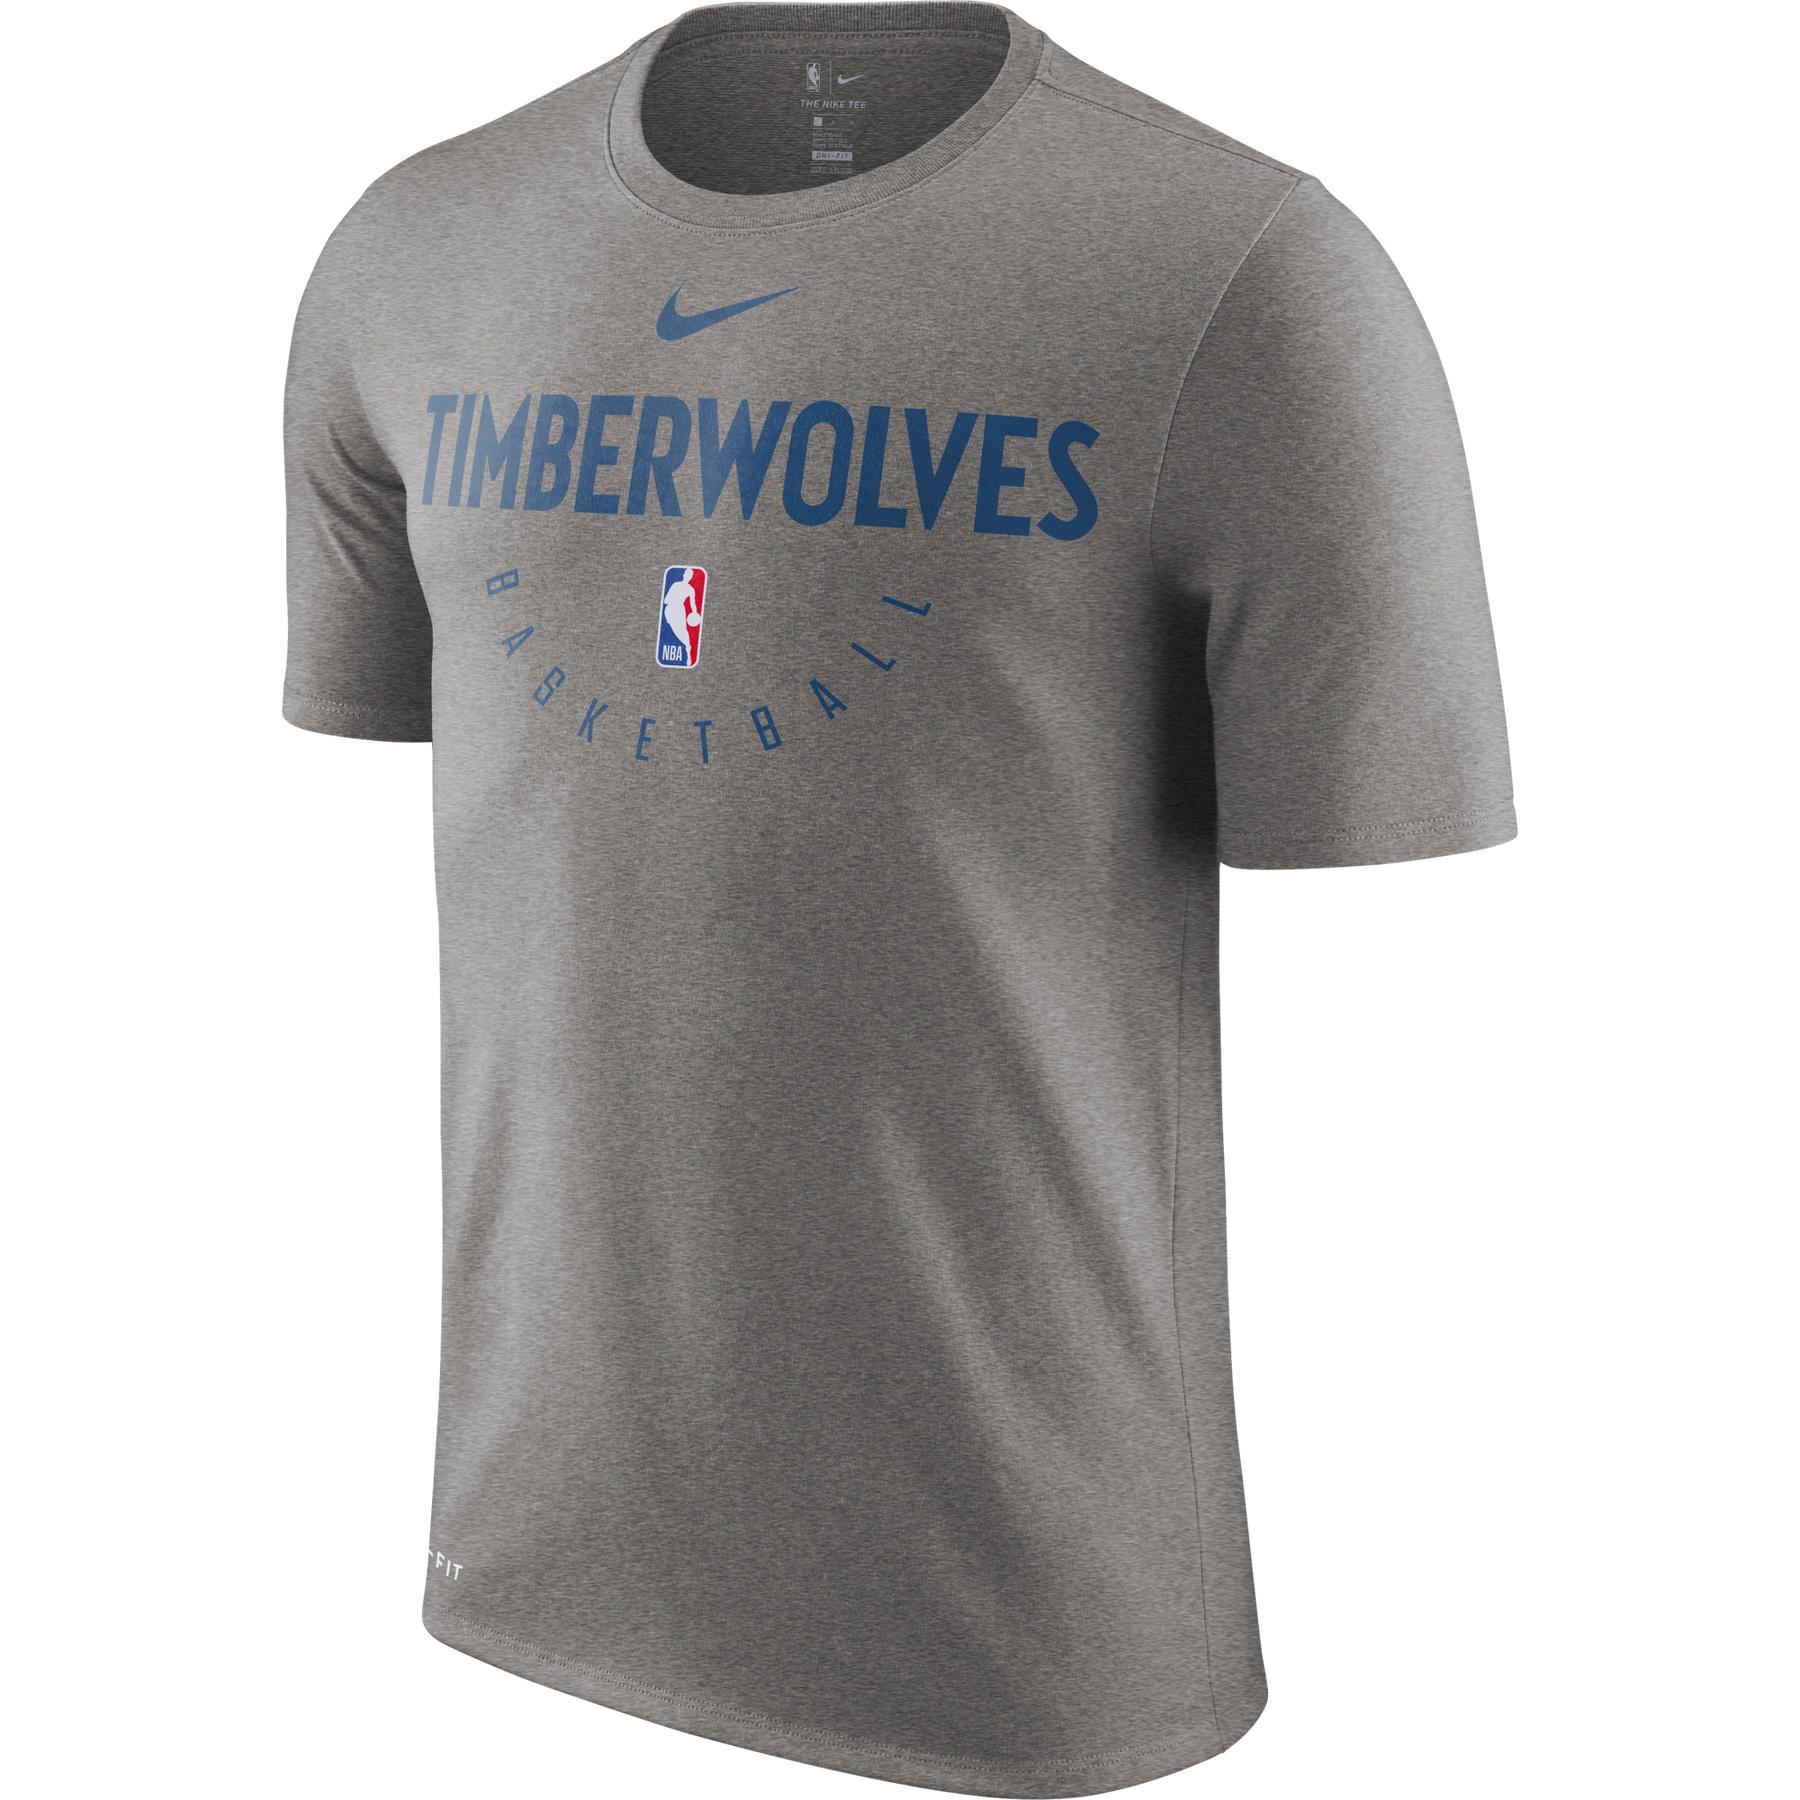 timberwolves gray jersey